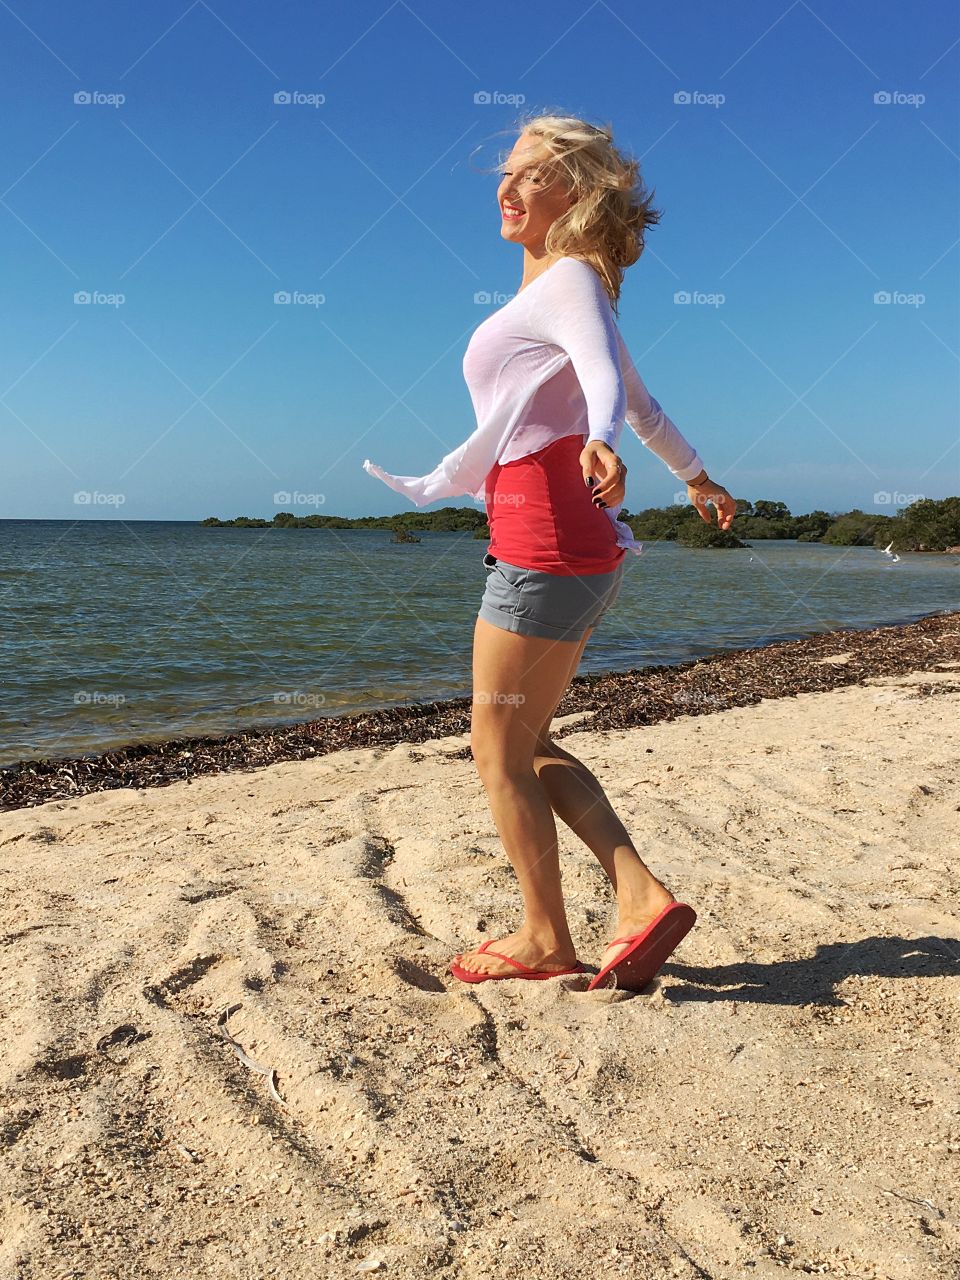 Girl dancing on beach